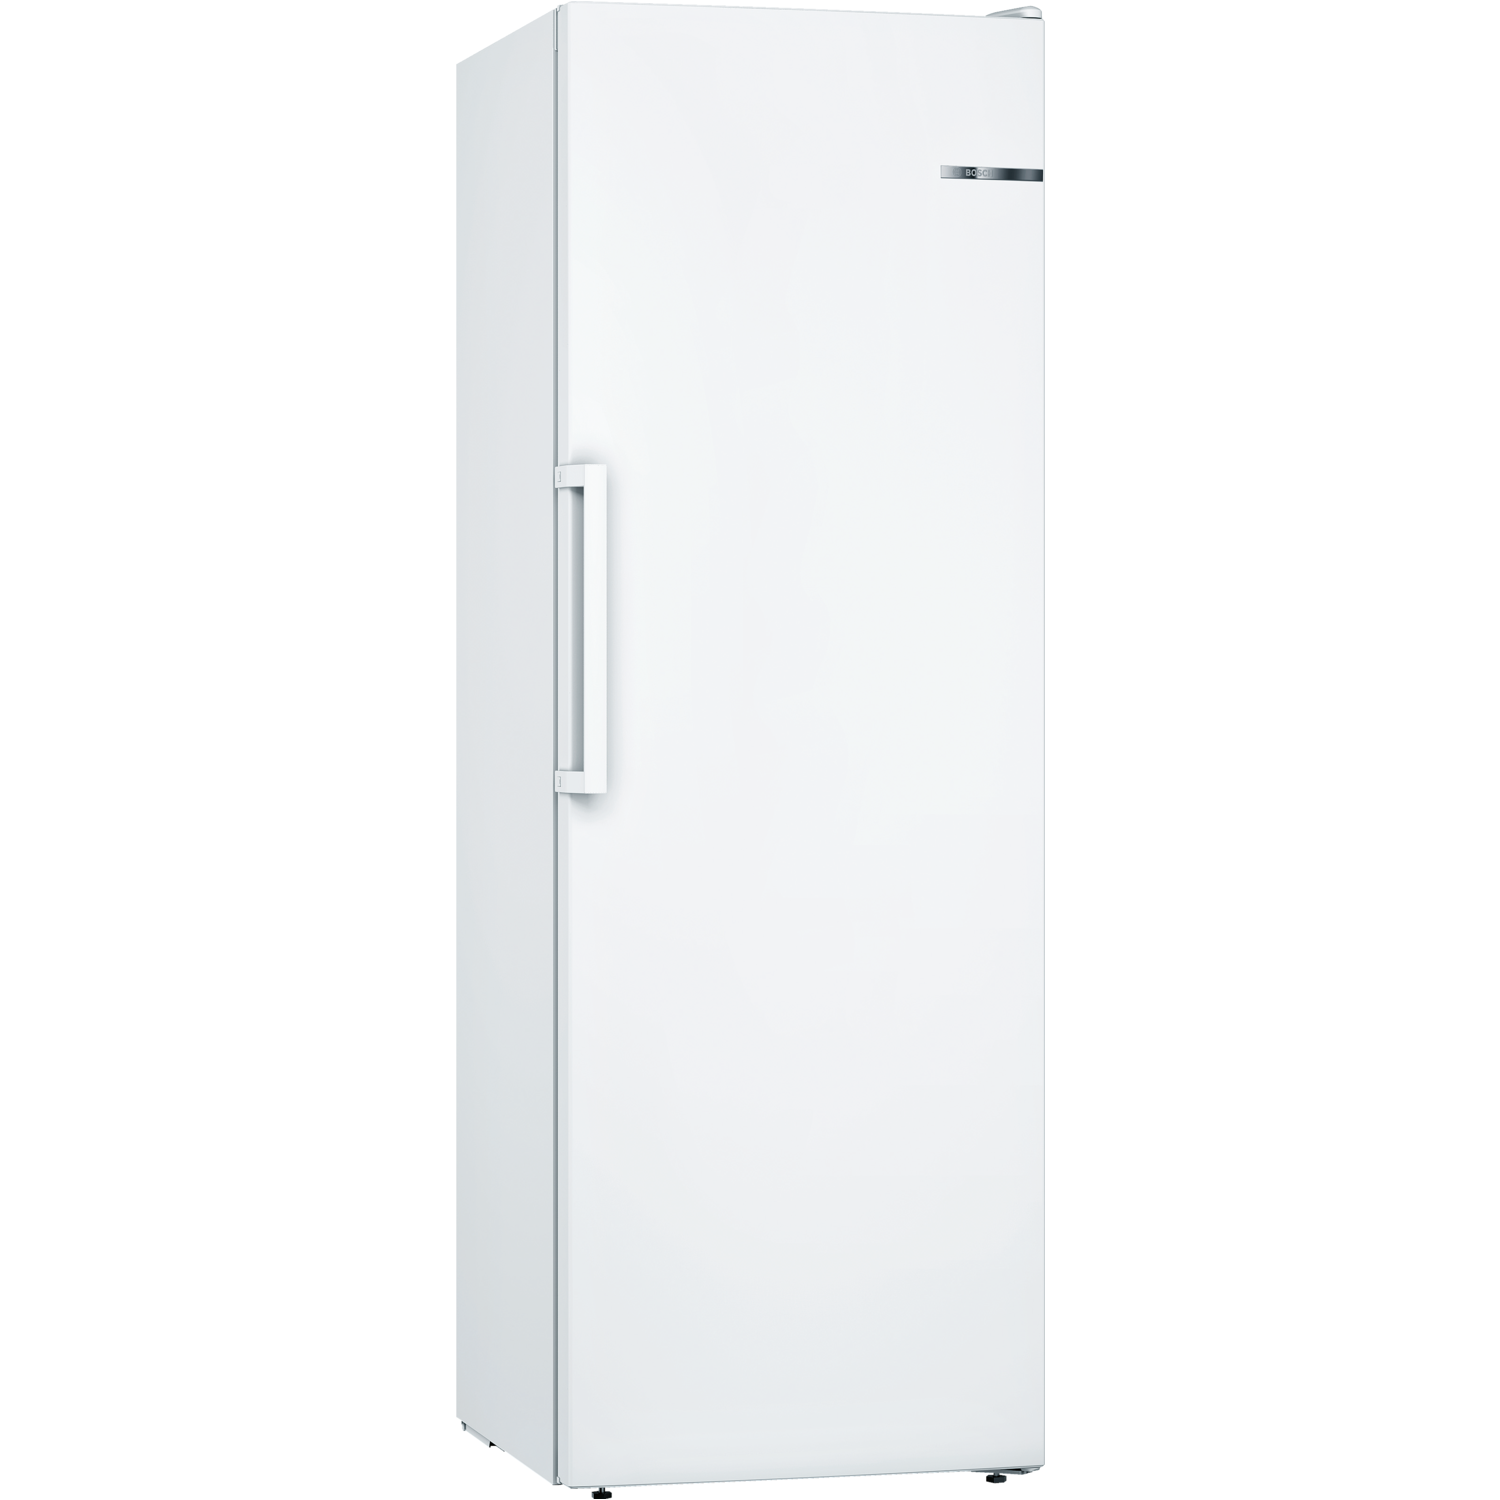 Bosch 225 Litre Freestanding Freezer - White